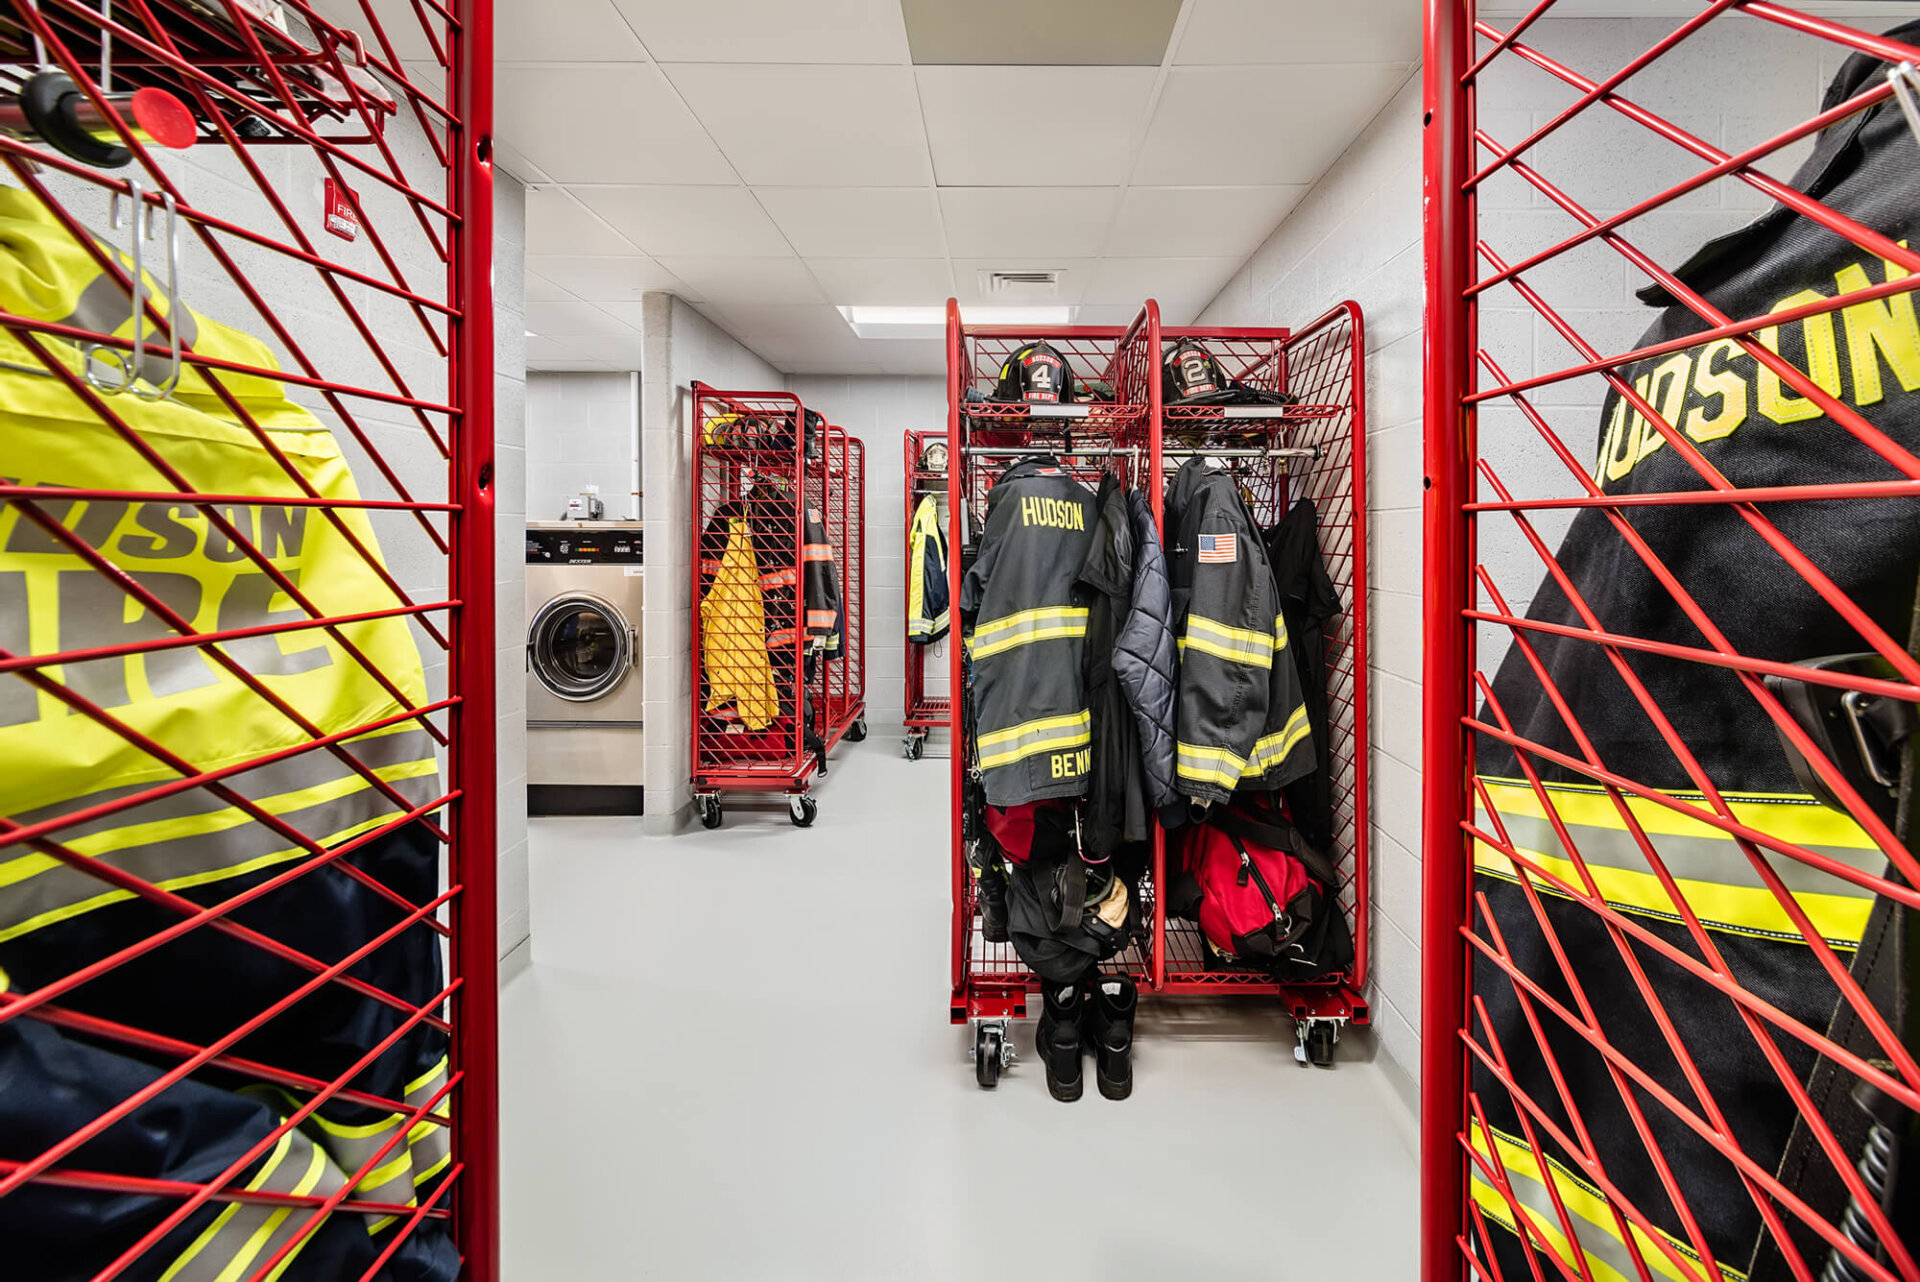 Hudson Fire Station equipment storage area